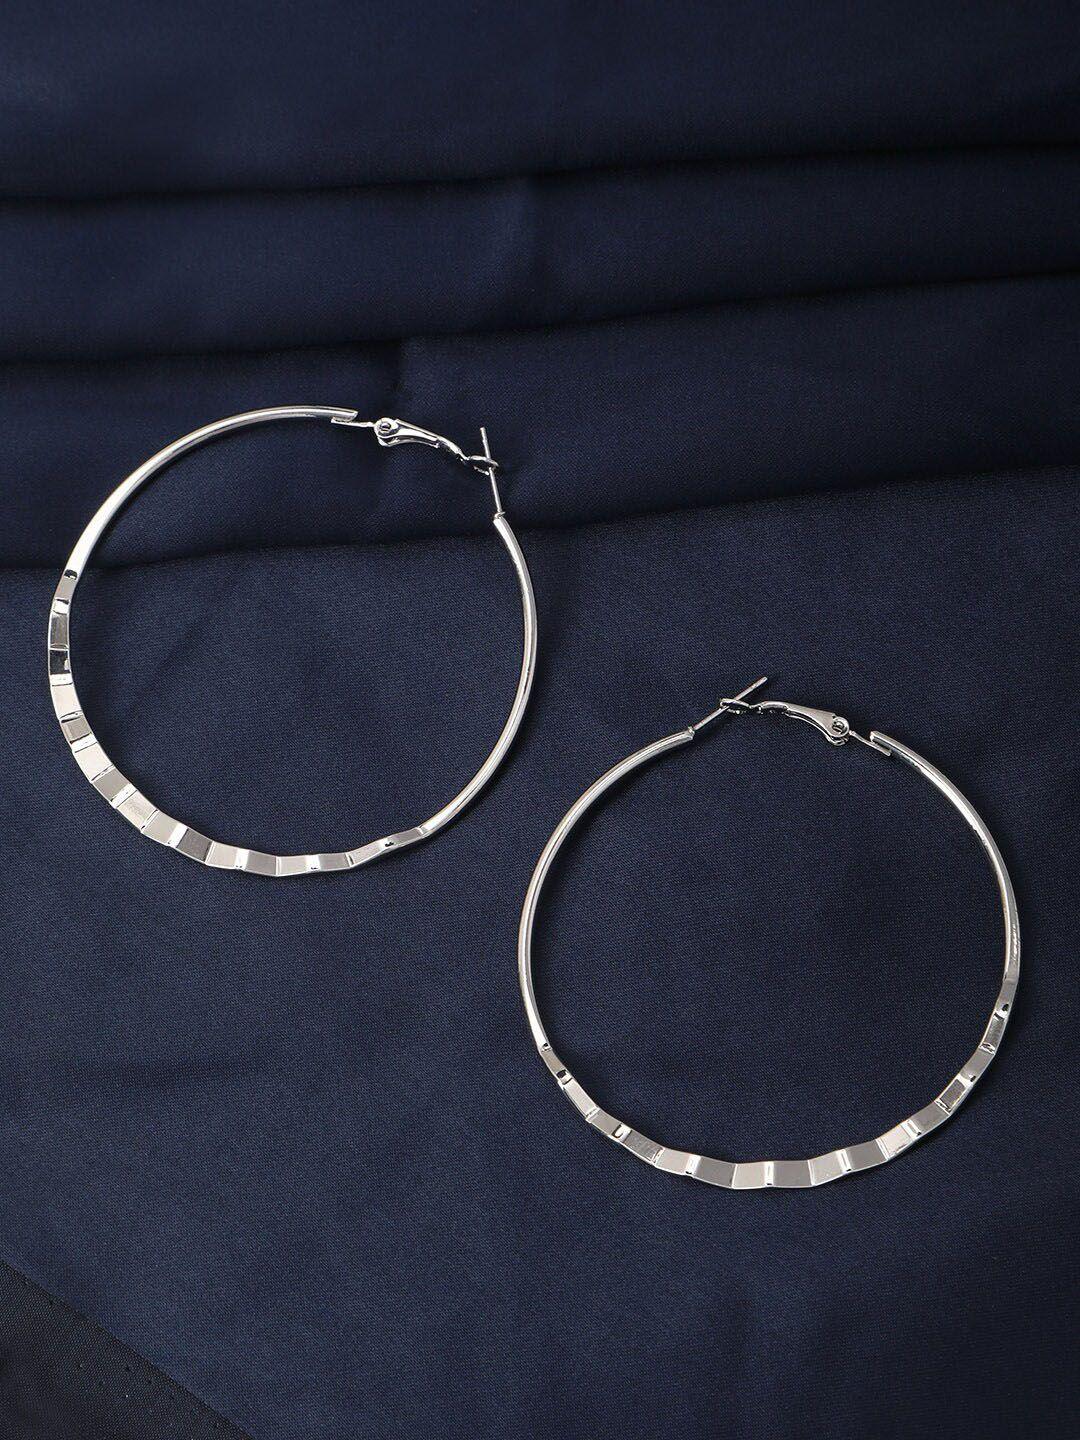 accessher silver-plated circular hoop earrings